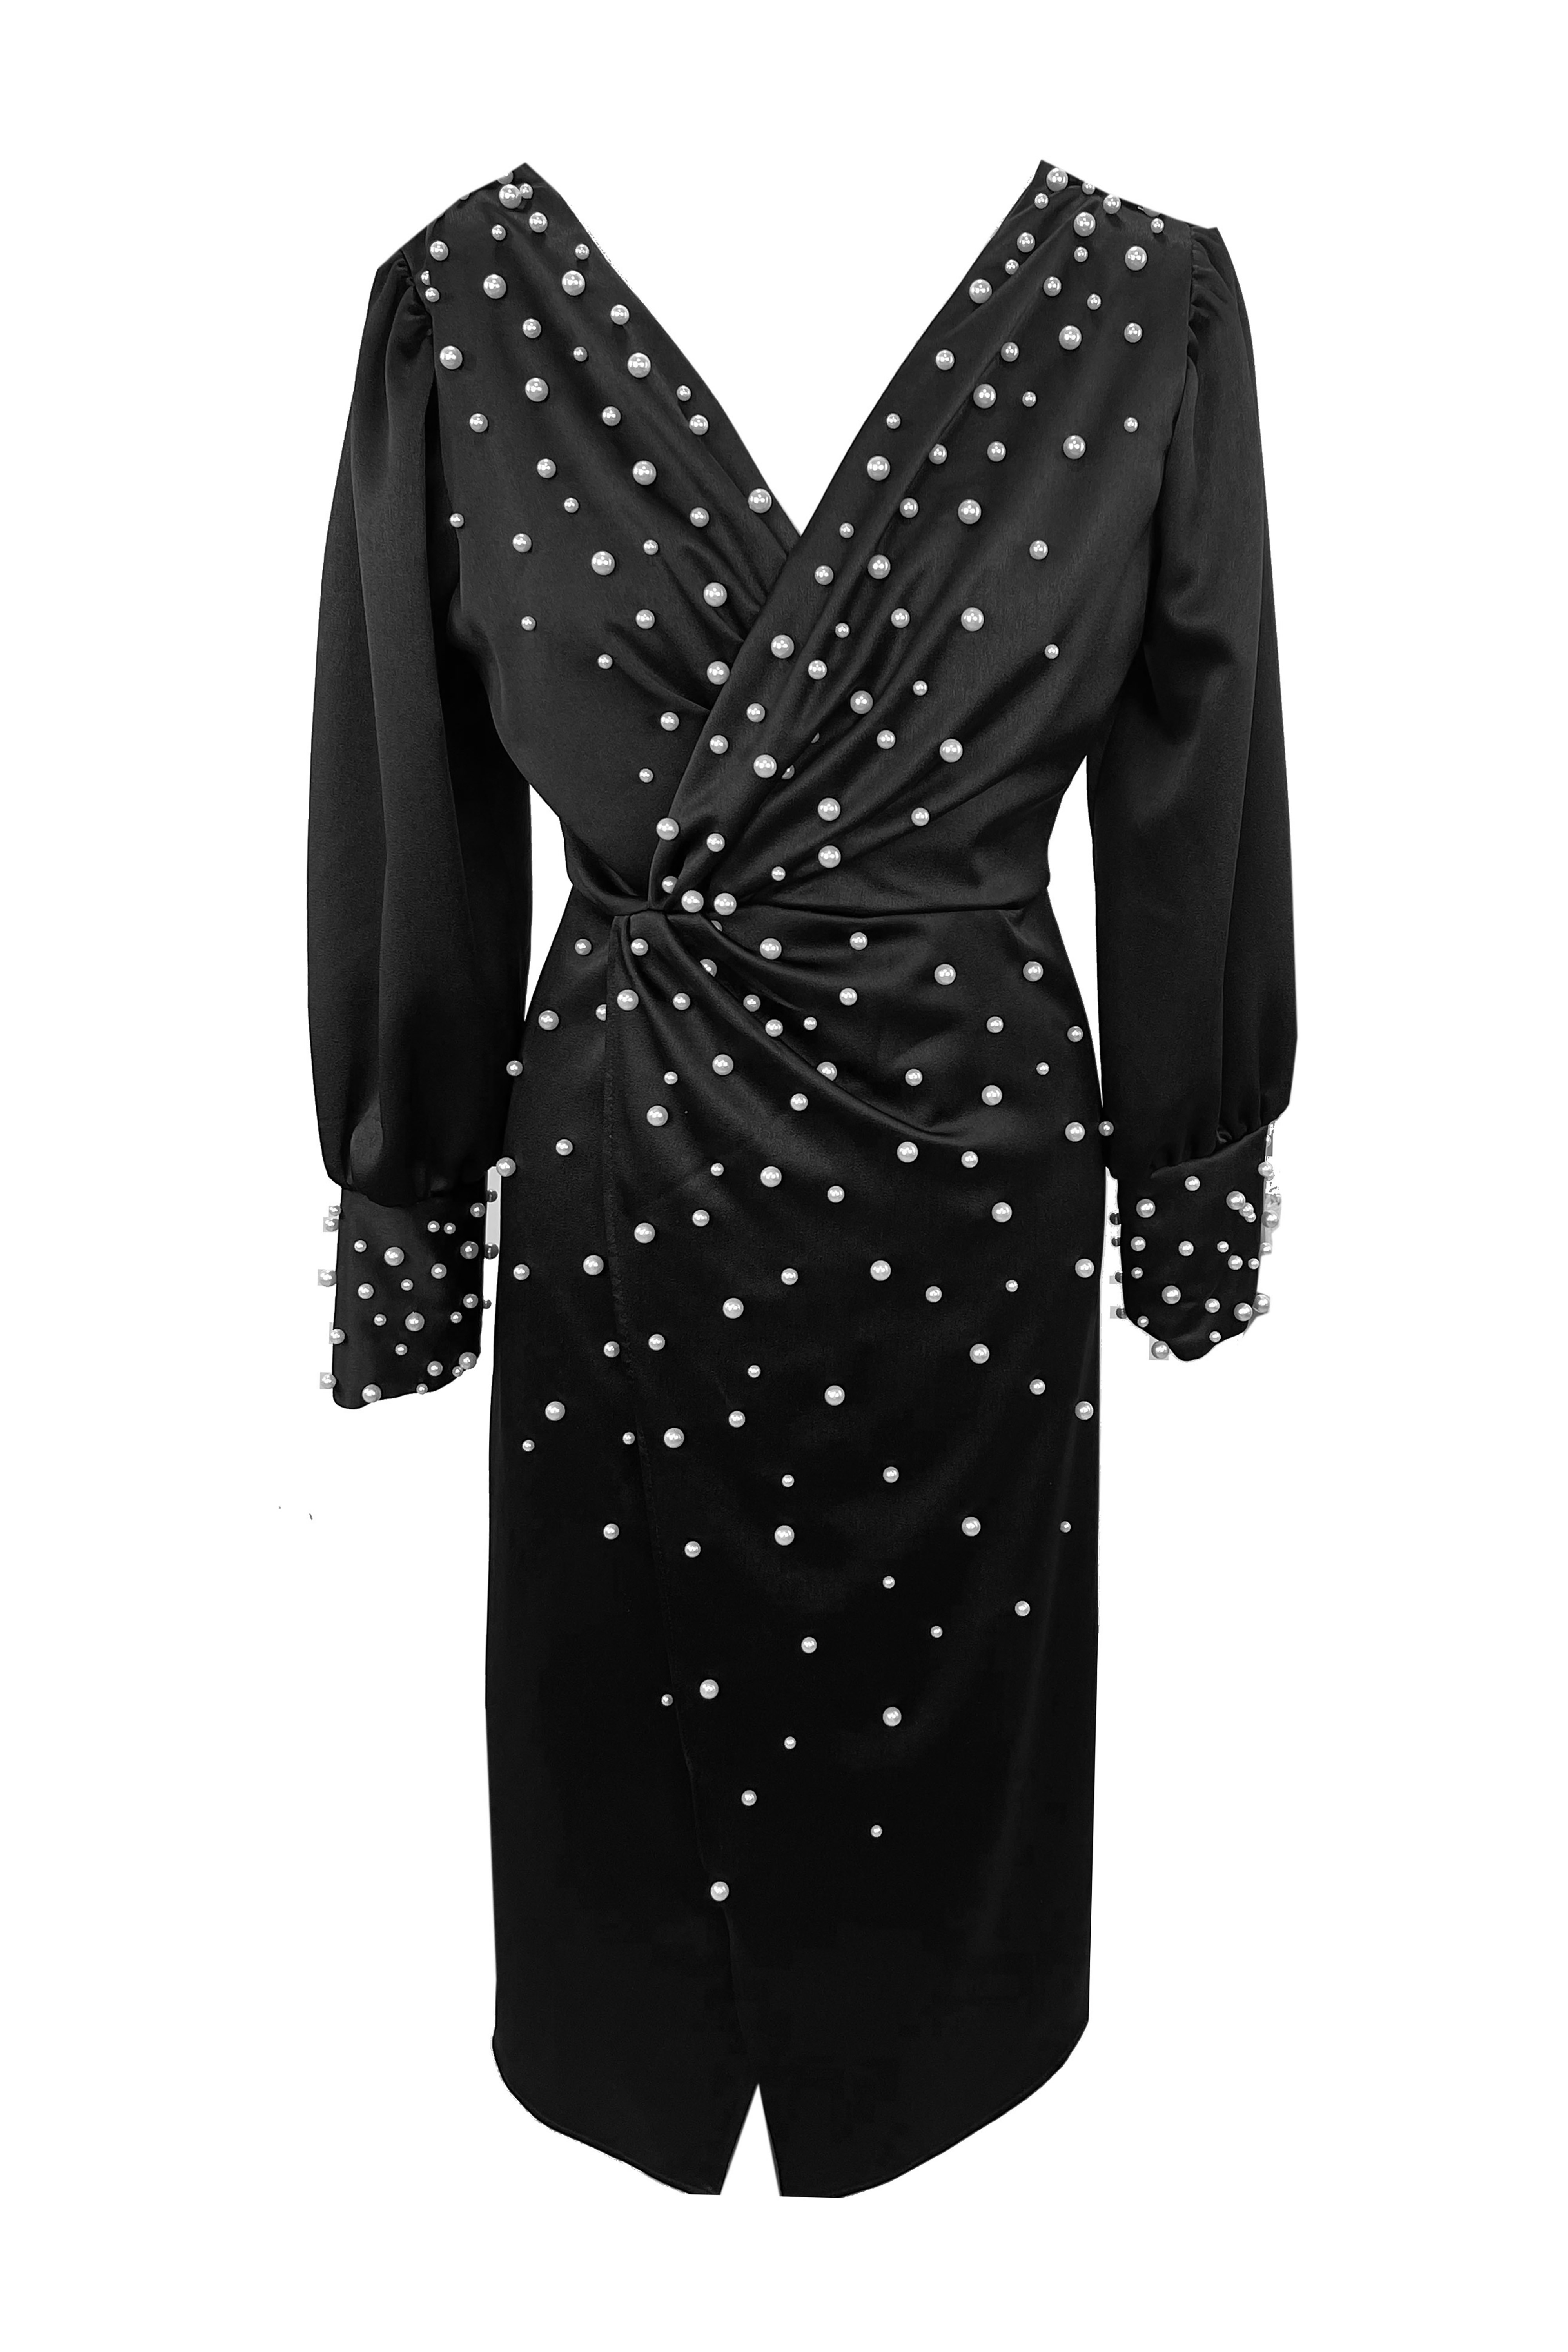 R24101 - BLACK 01 - AMINA black dress with pearls - Ambar Studio